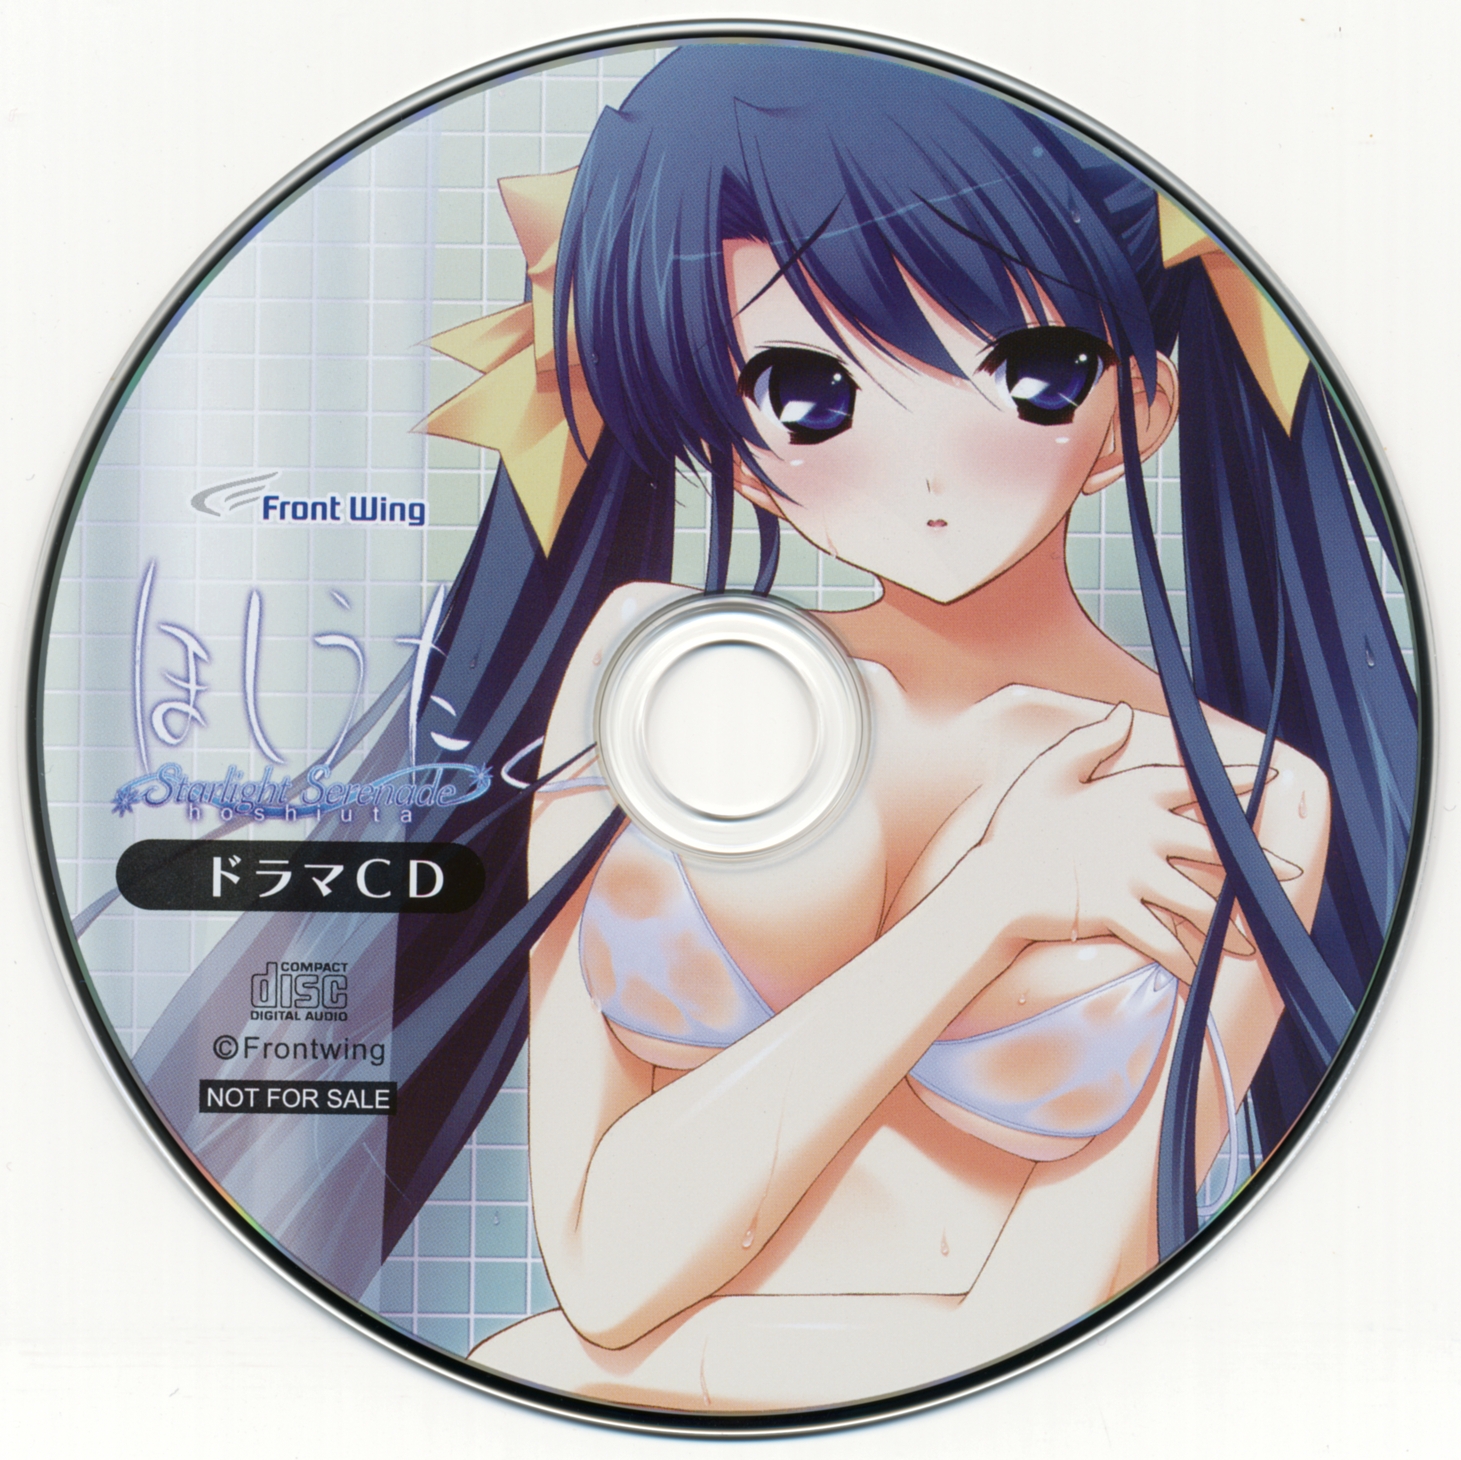 Hoshiuta ~Starlight Serenade~ Sofmap Privilege Drama CD [FWHU-0912SM] MP3 -  Download Hoshiuta ~Starlight Serenade~ Sofmap Privilege Drama CD  [FWHU-0912SM] Soundtracks for FREE!